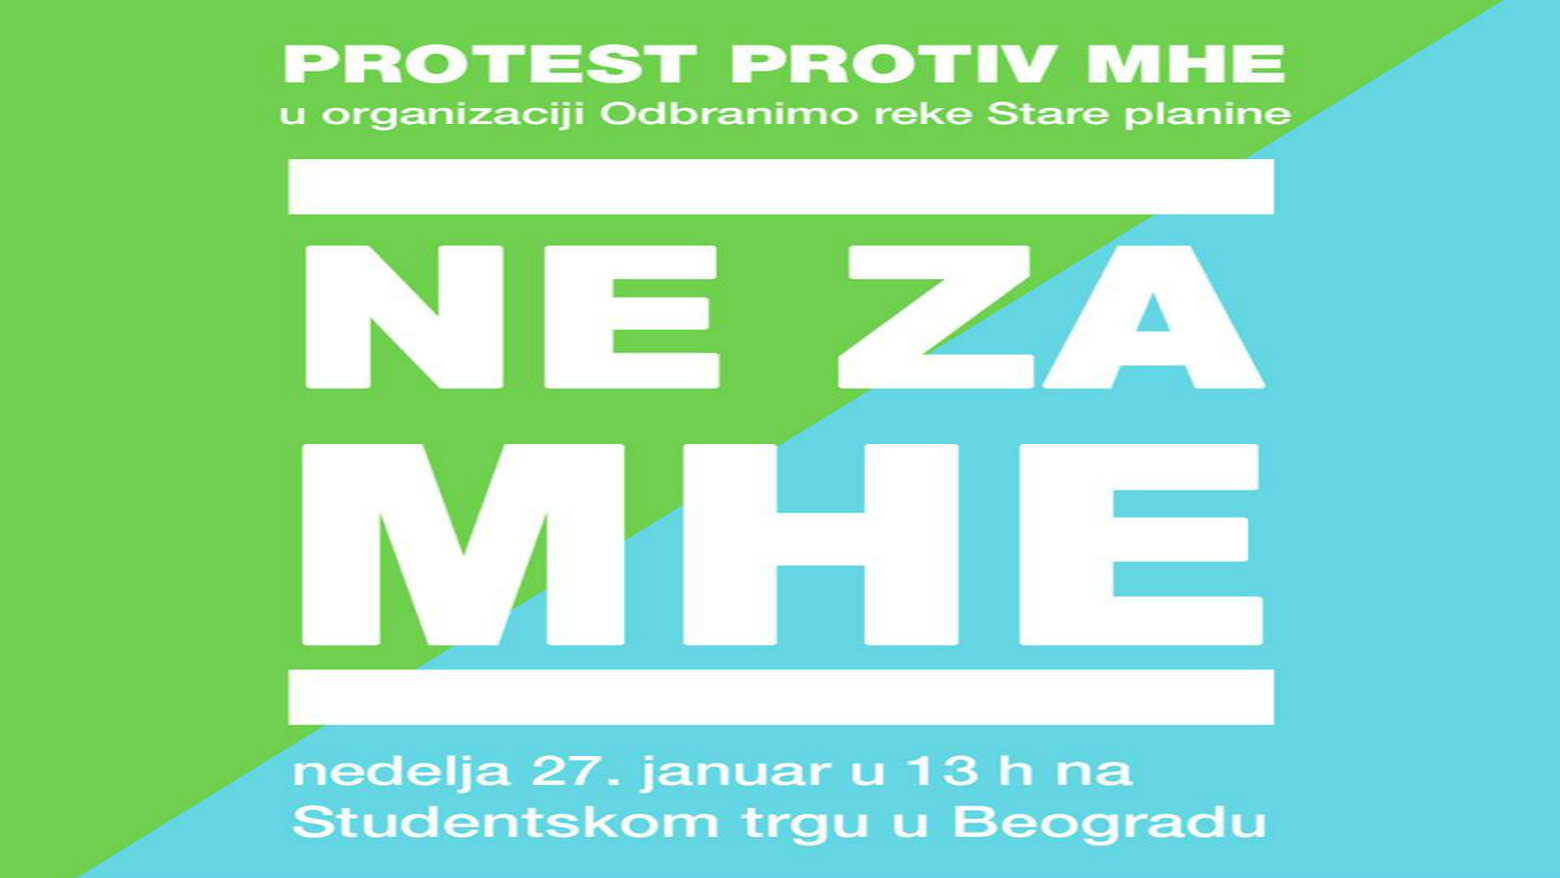 Protest protiv gradnje mini hidroelektrana 31. maja u Beogradu 1